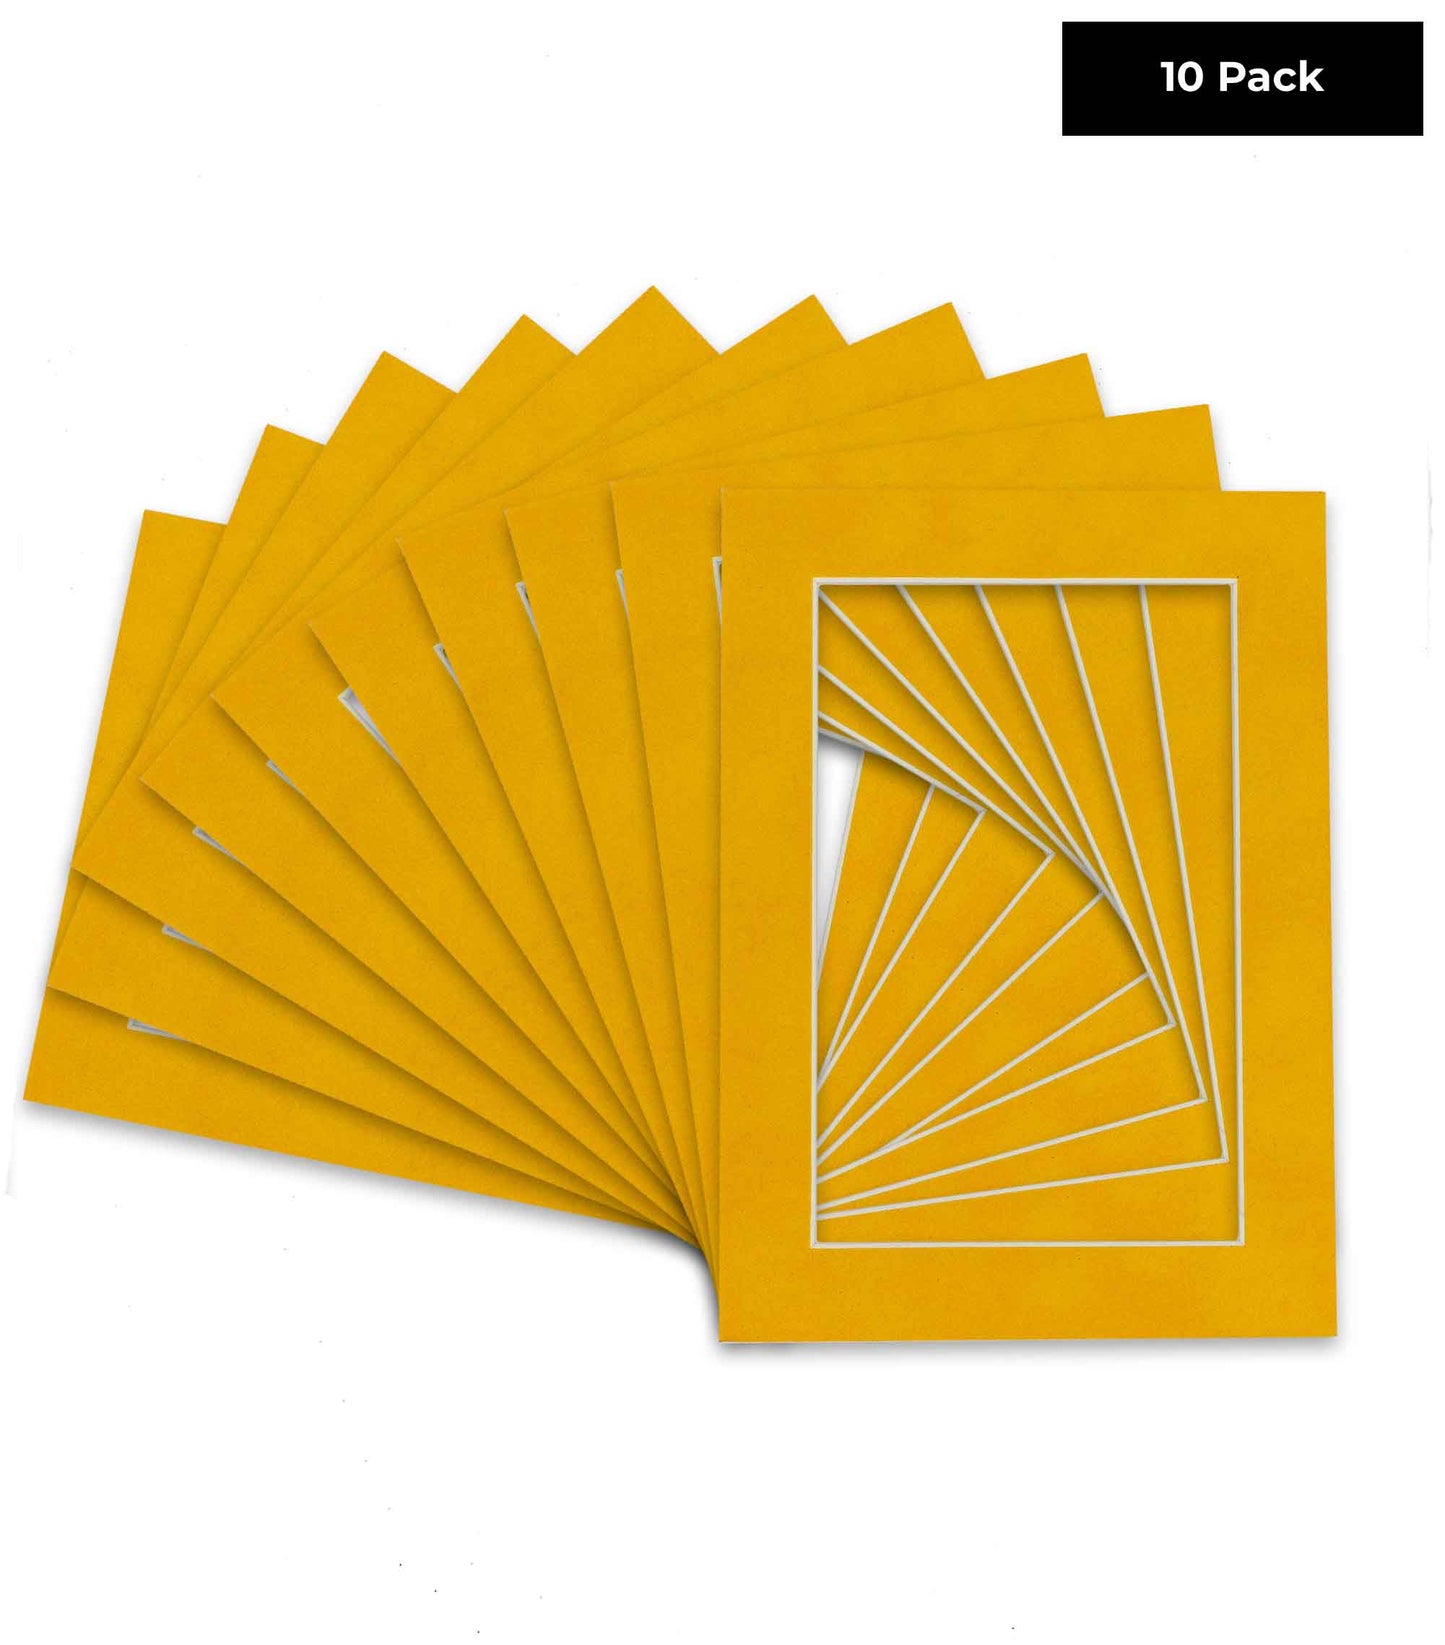 Pack of 10 Bright Yellow Precut Acid-Free Matboards